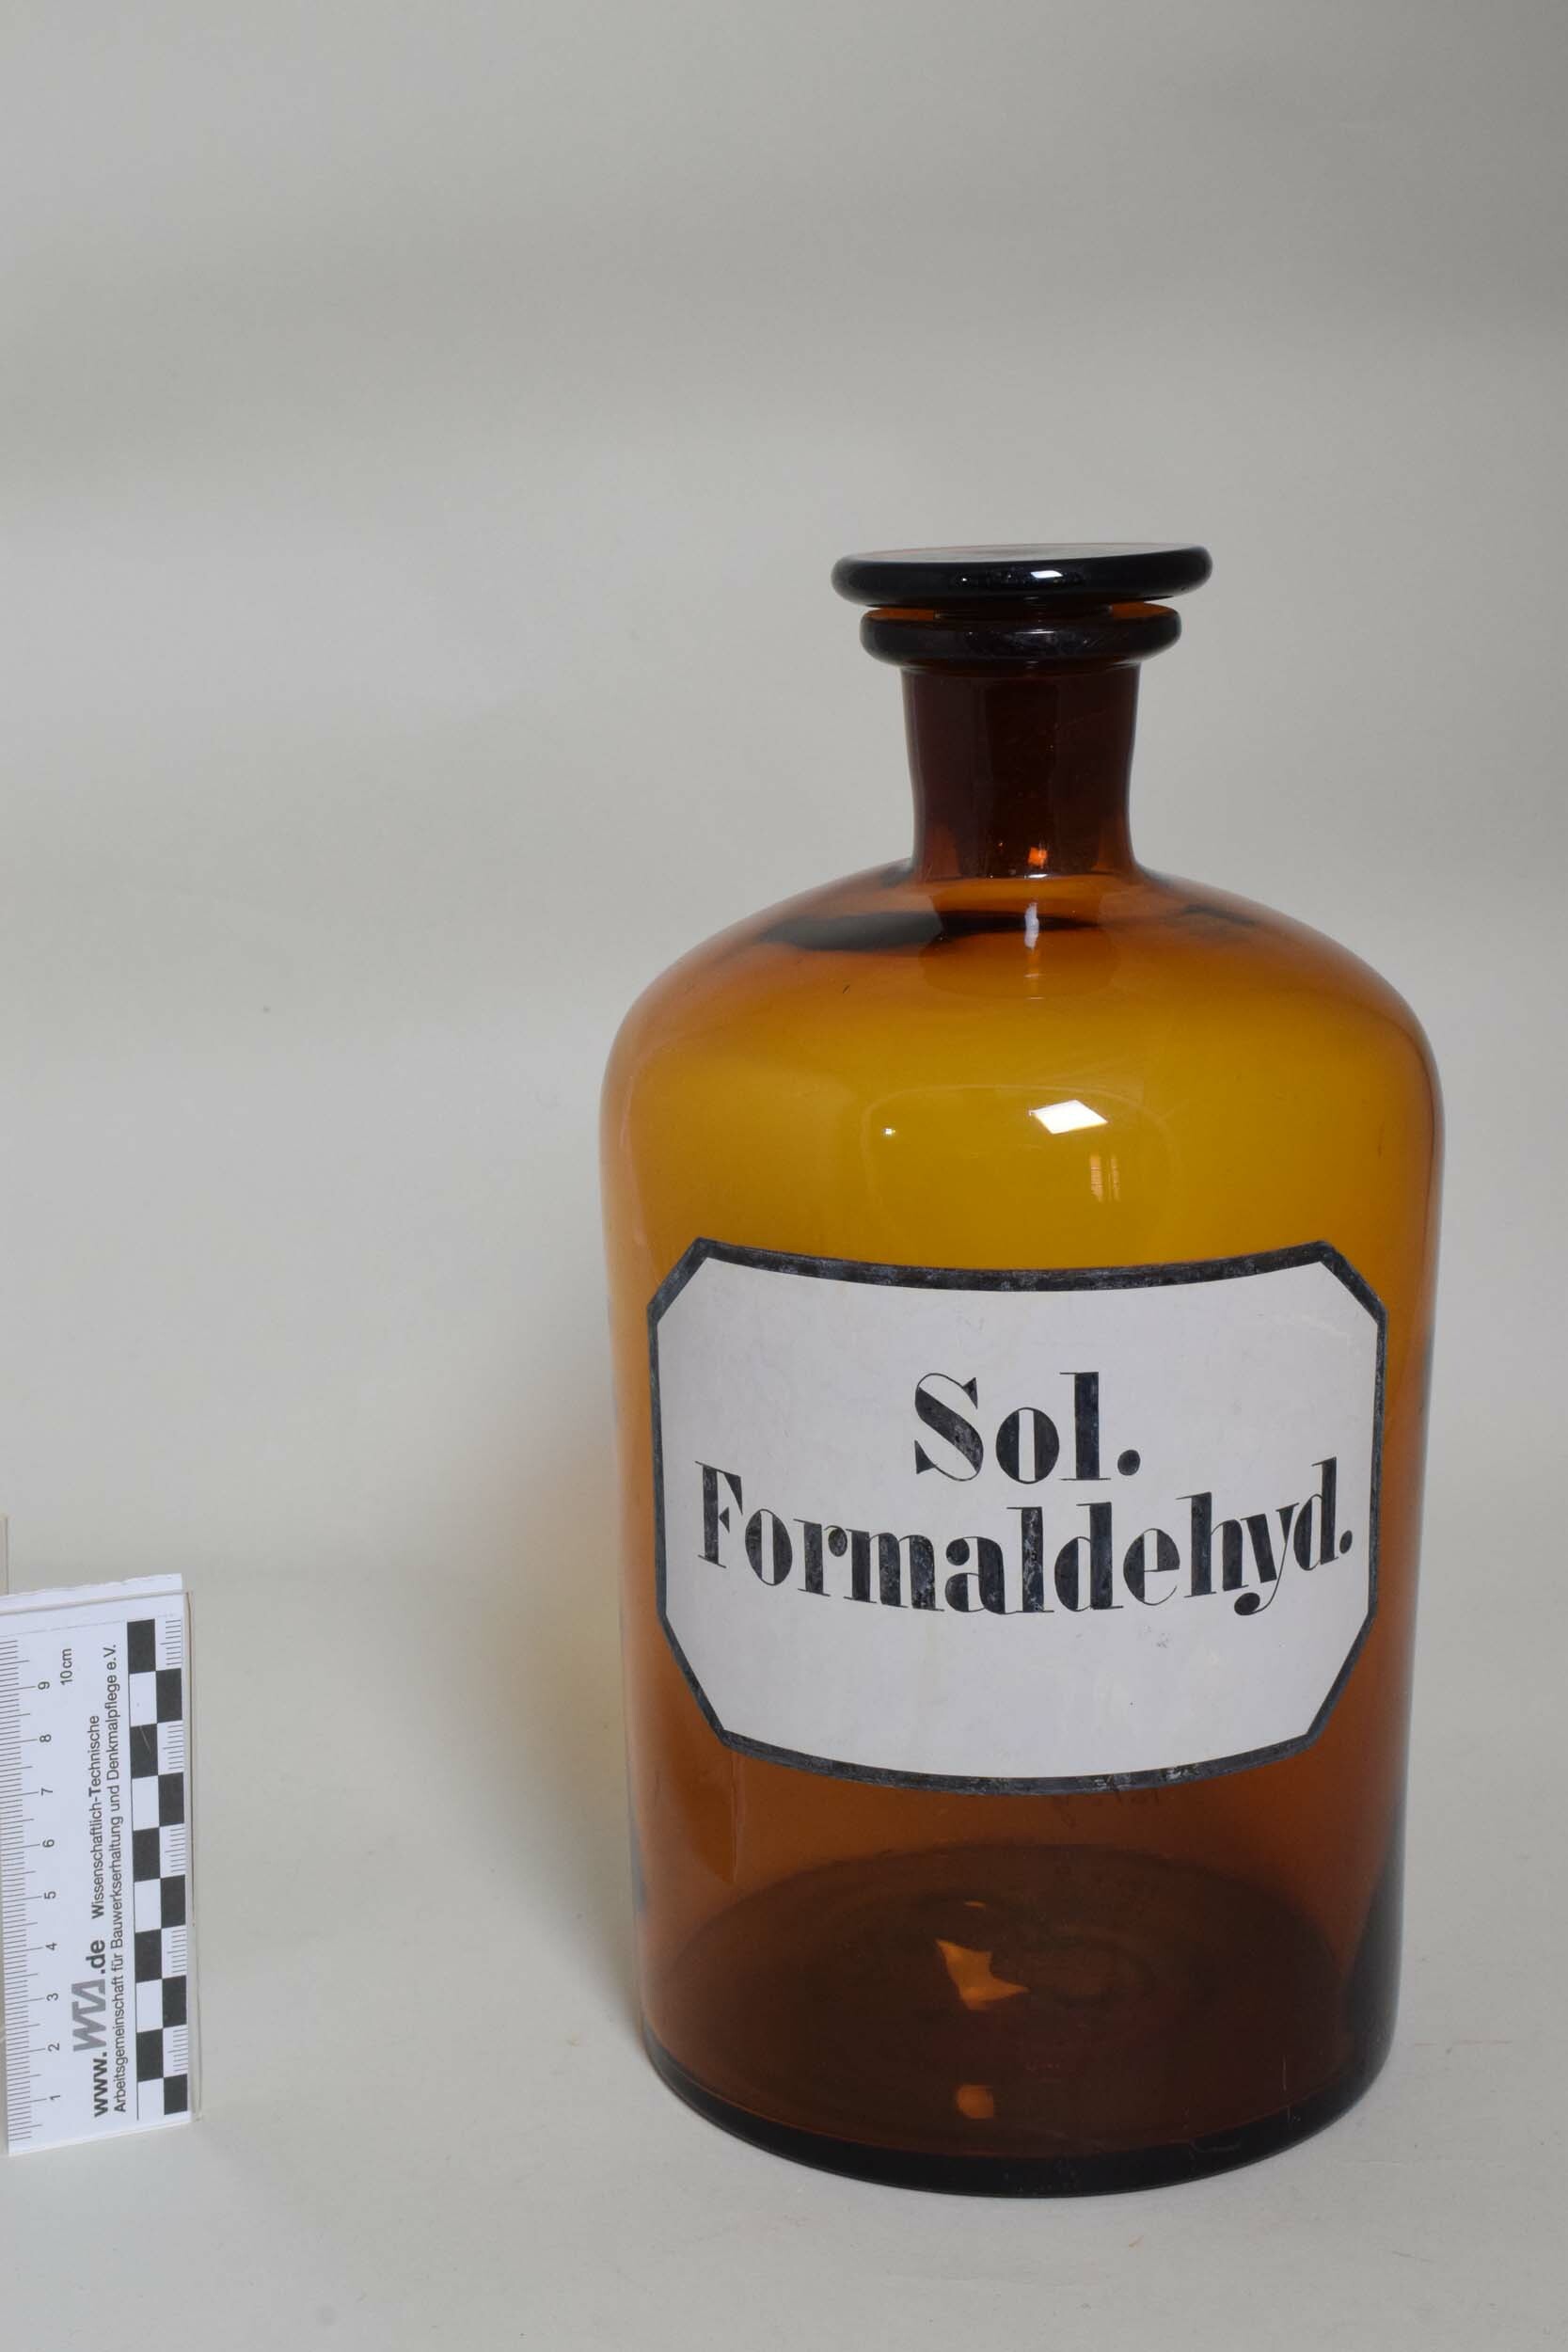 Apothekenflasche "Sol. Formaldehyd." (Heimatmuseum Dohna CC BY-NC-SA)